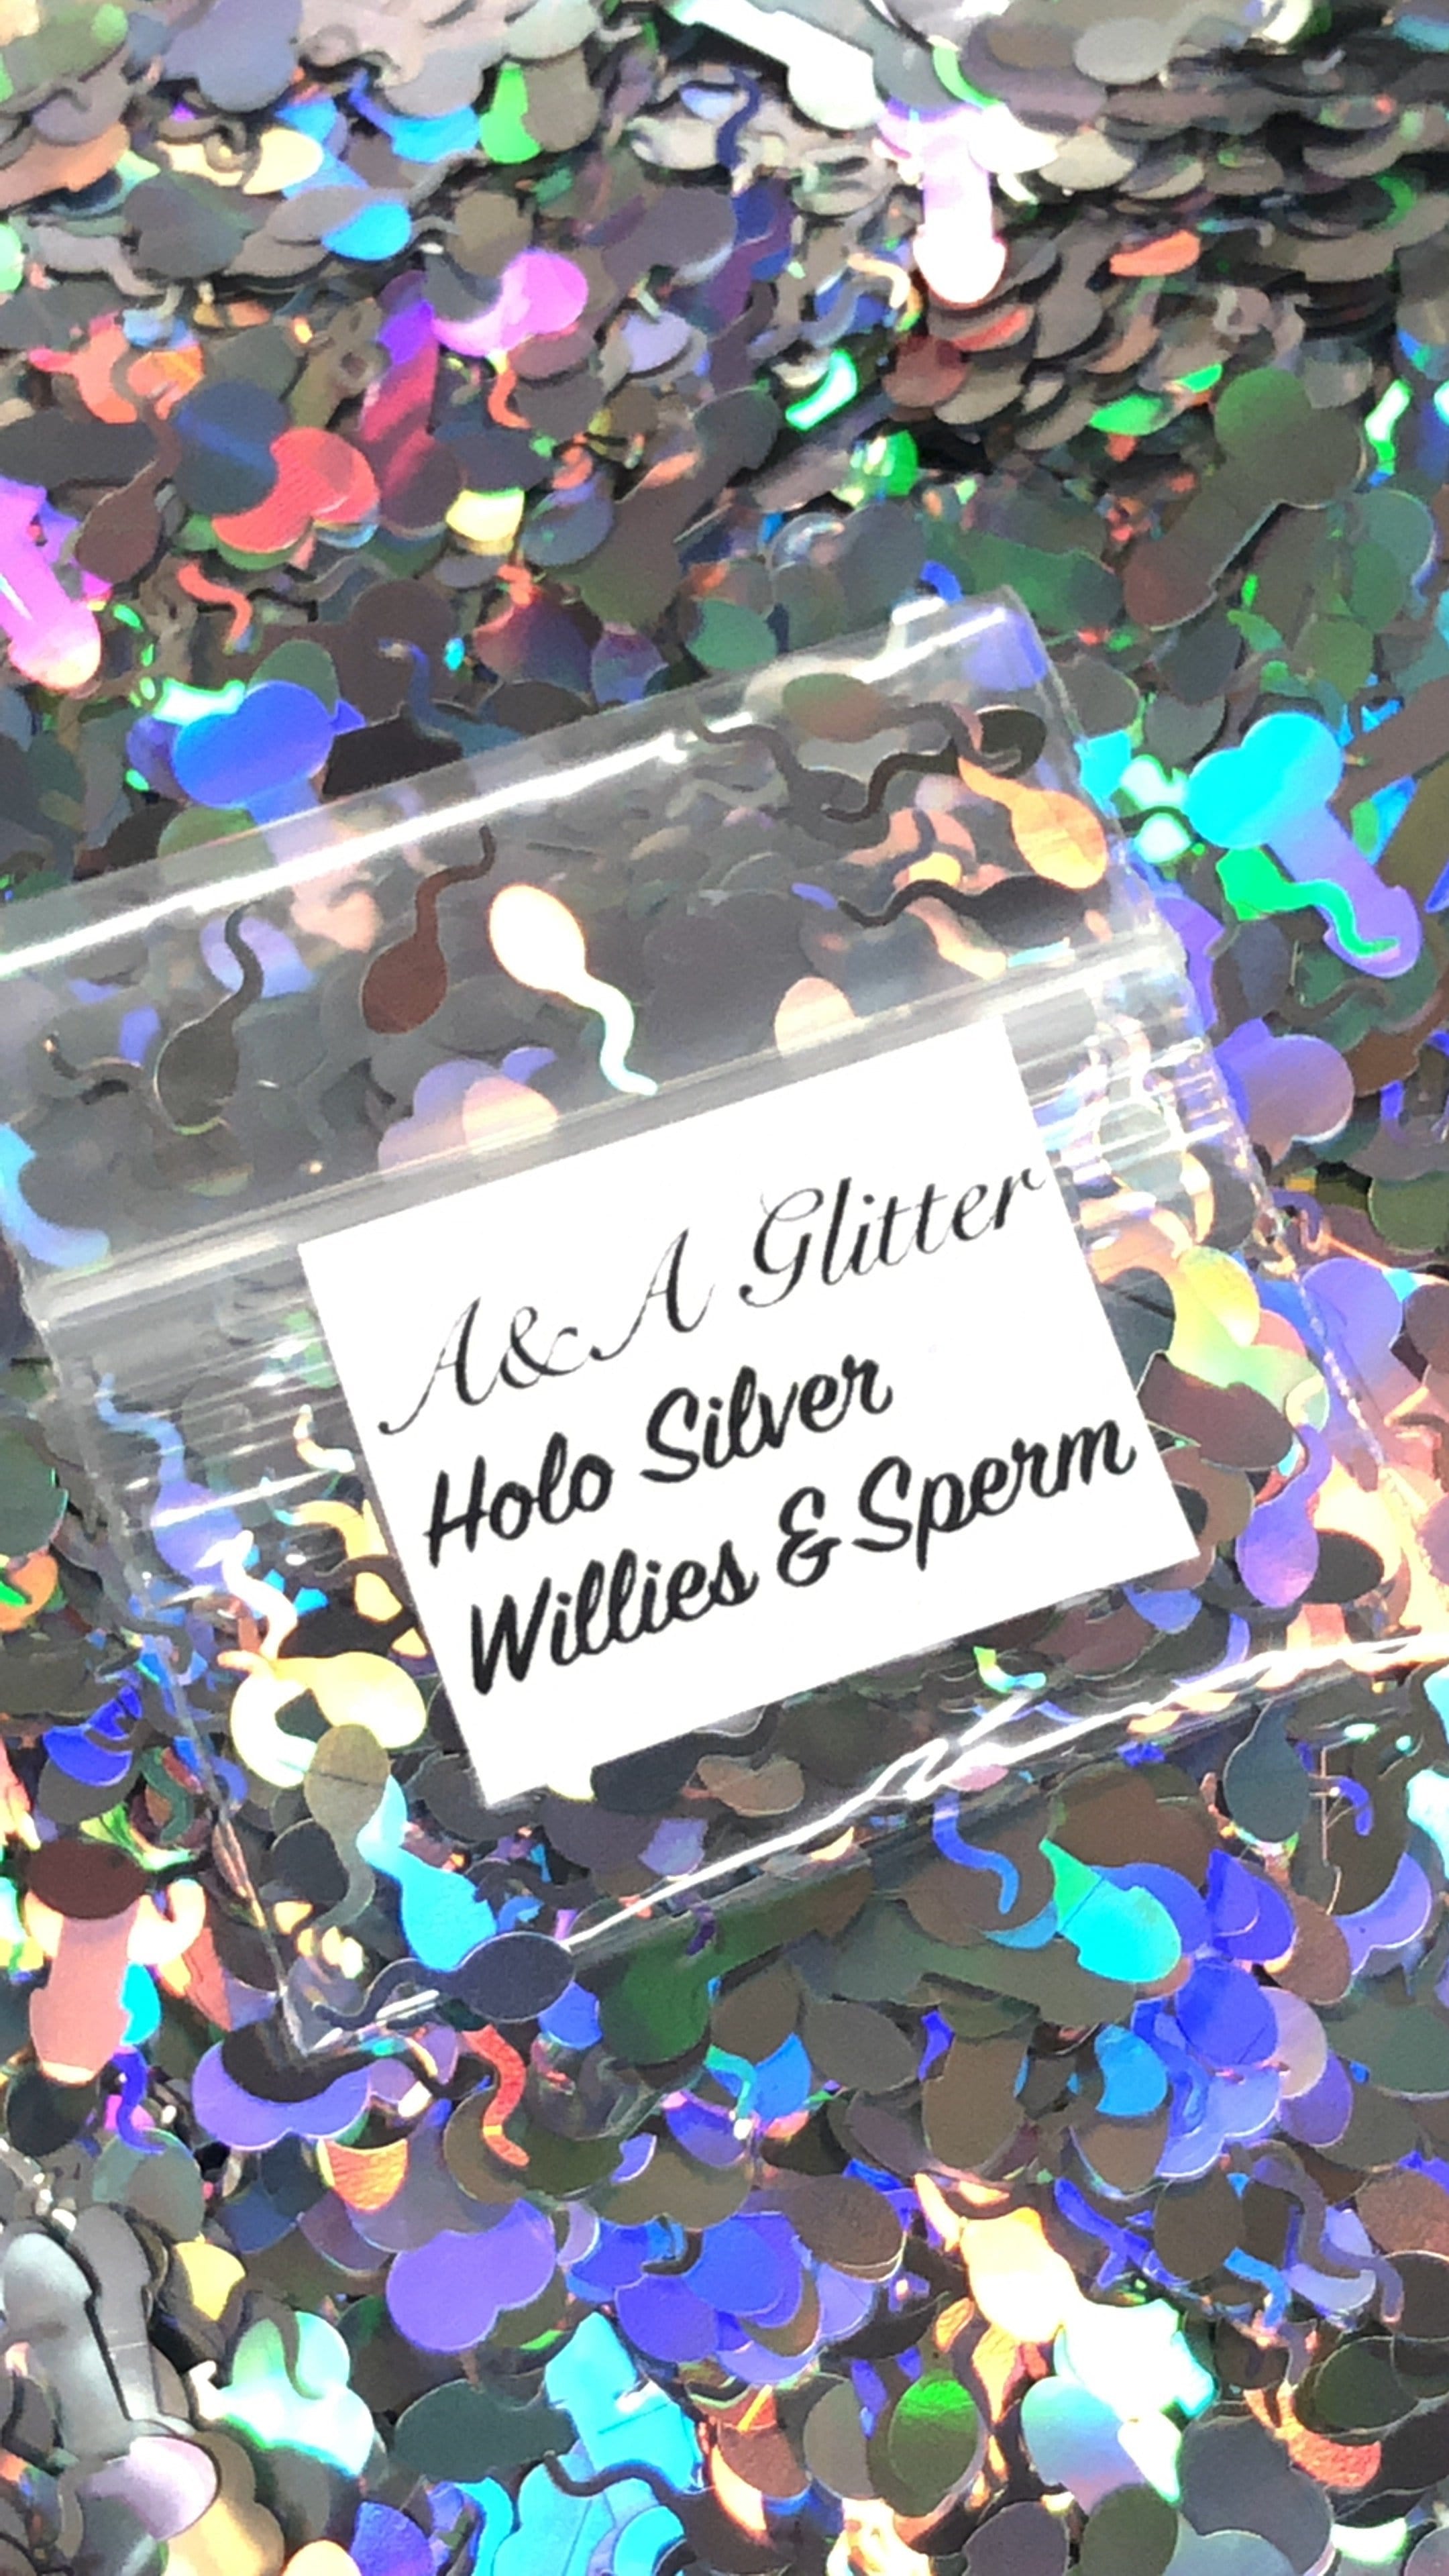 Holo Silver Willies & Sperm